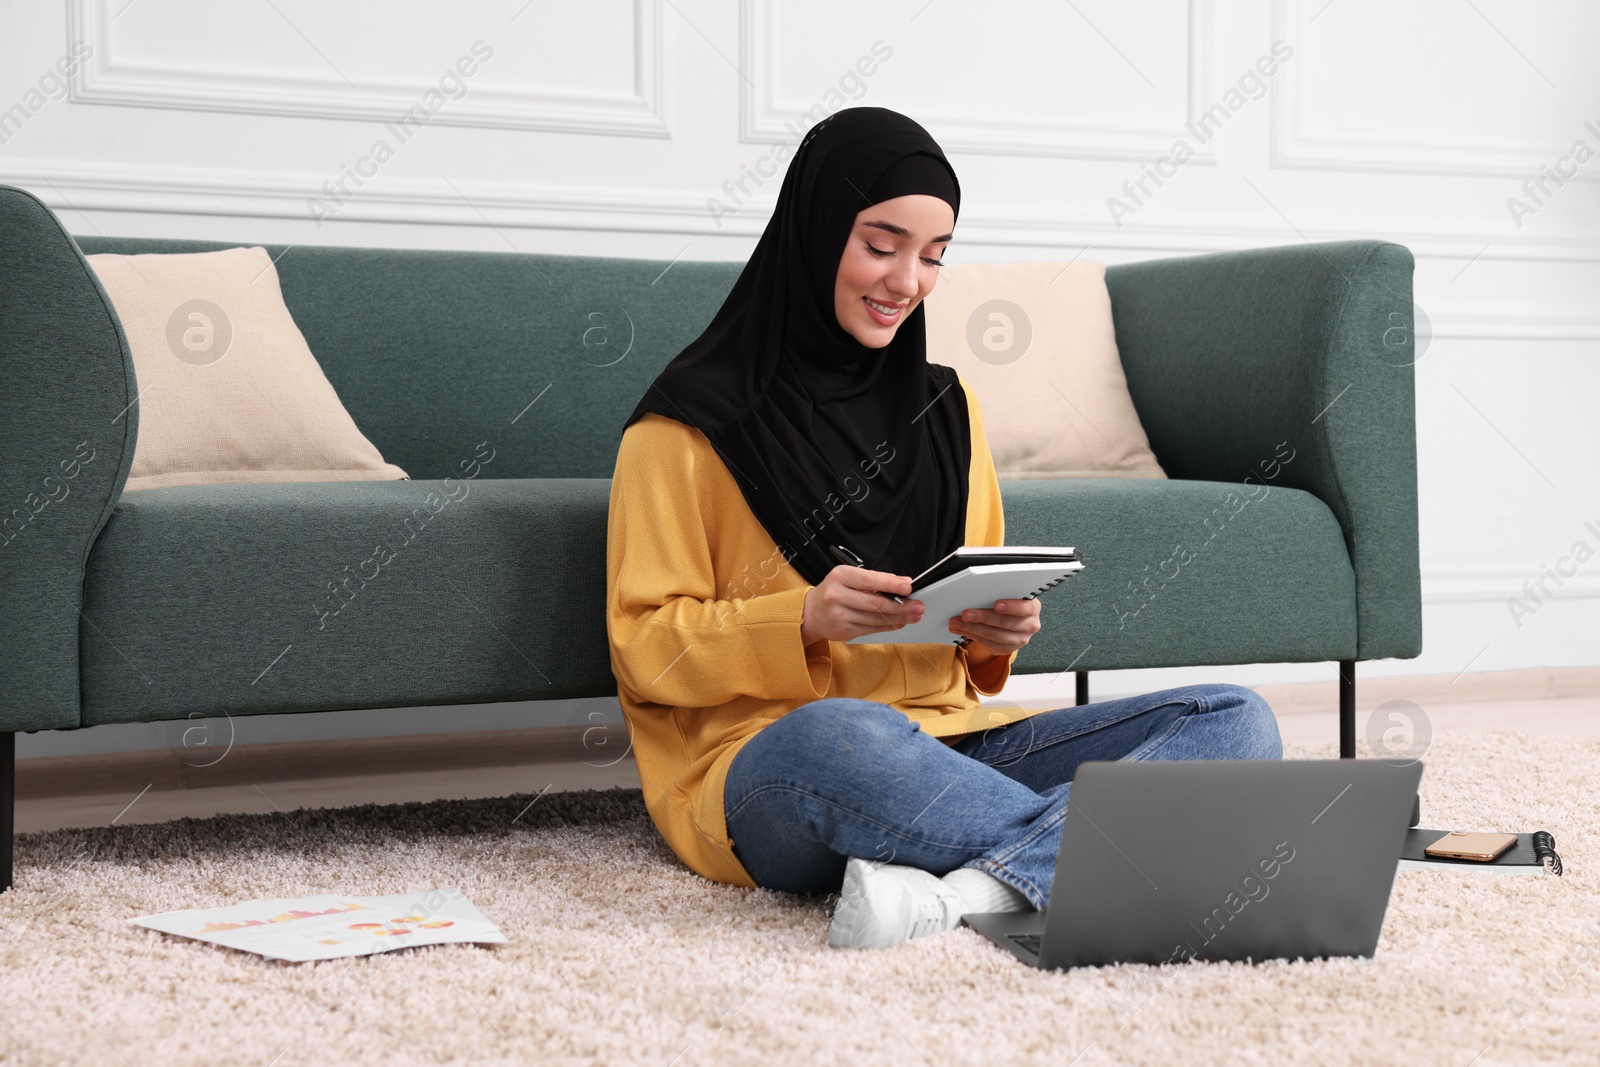 Photo of Muslim woman in hijab using laptop on floor near sofa indoors